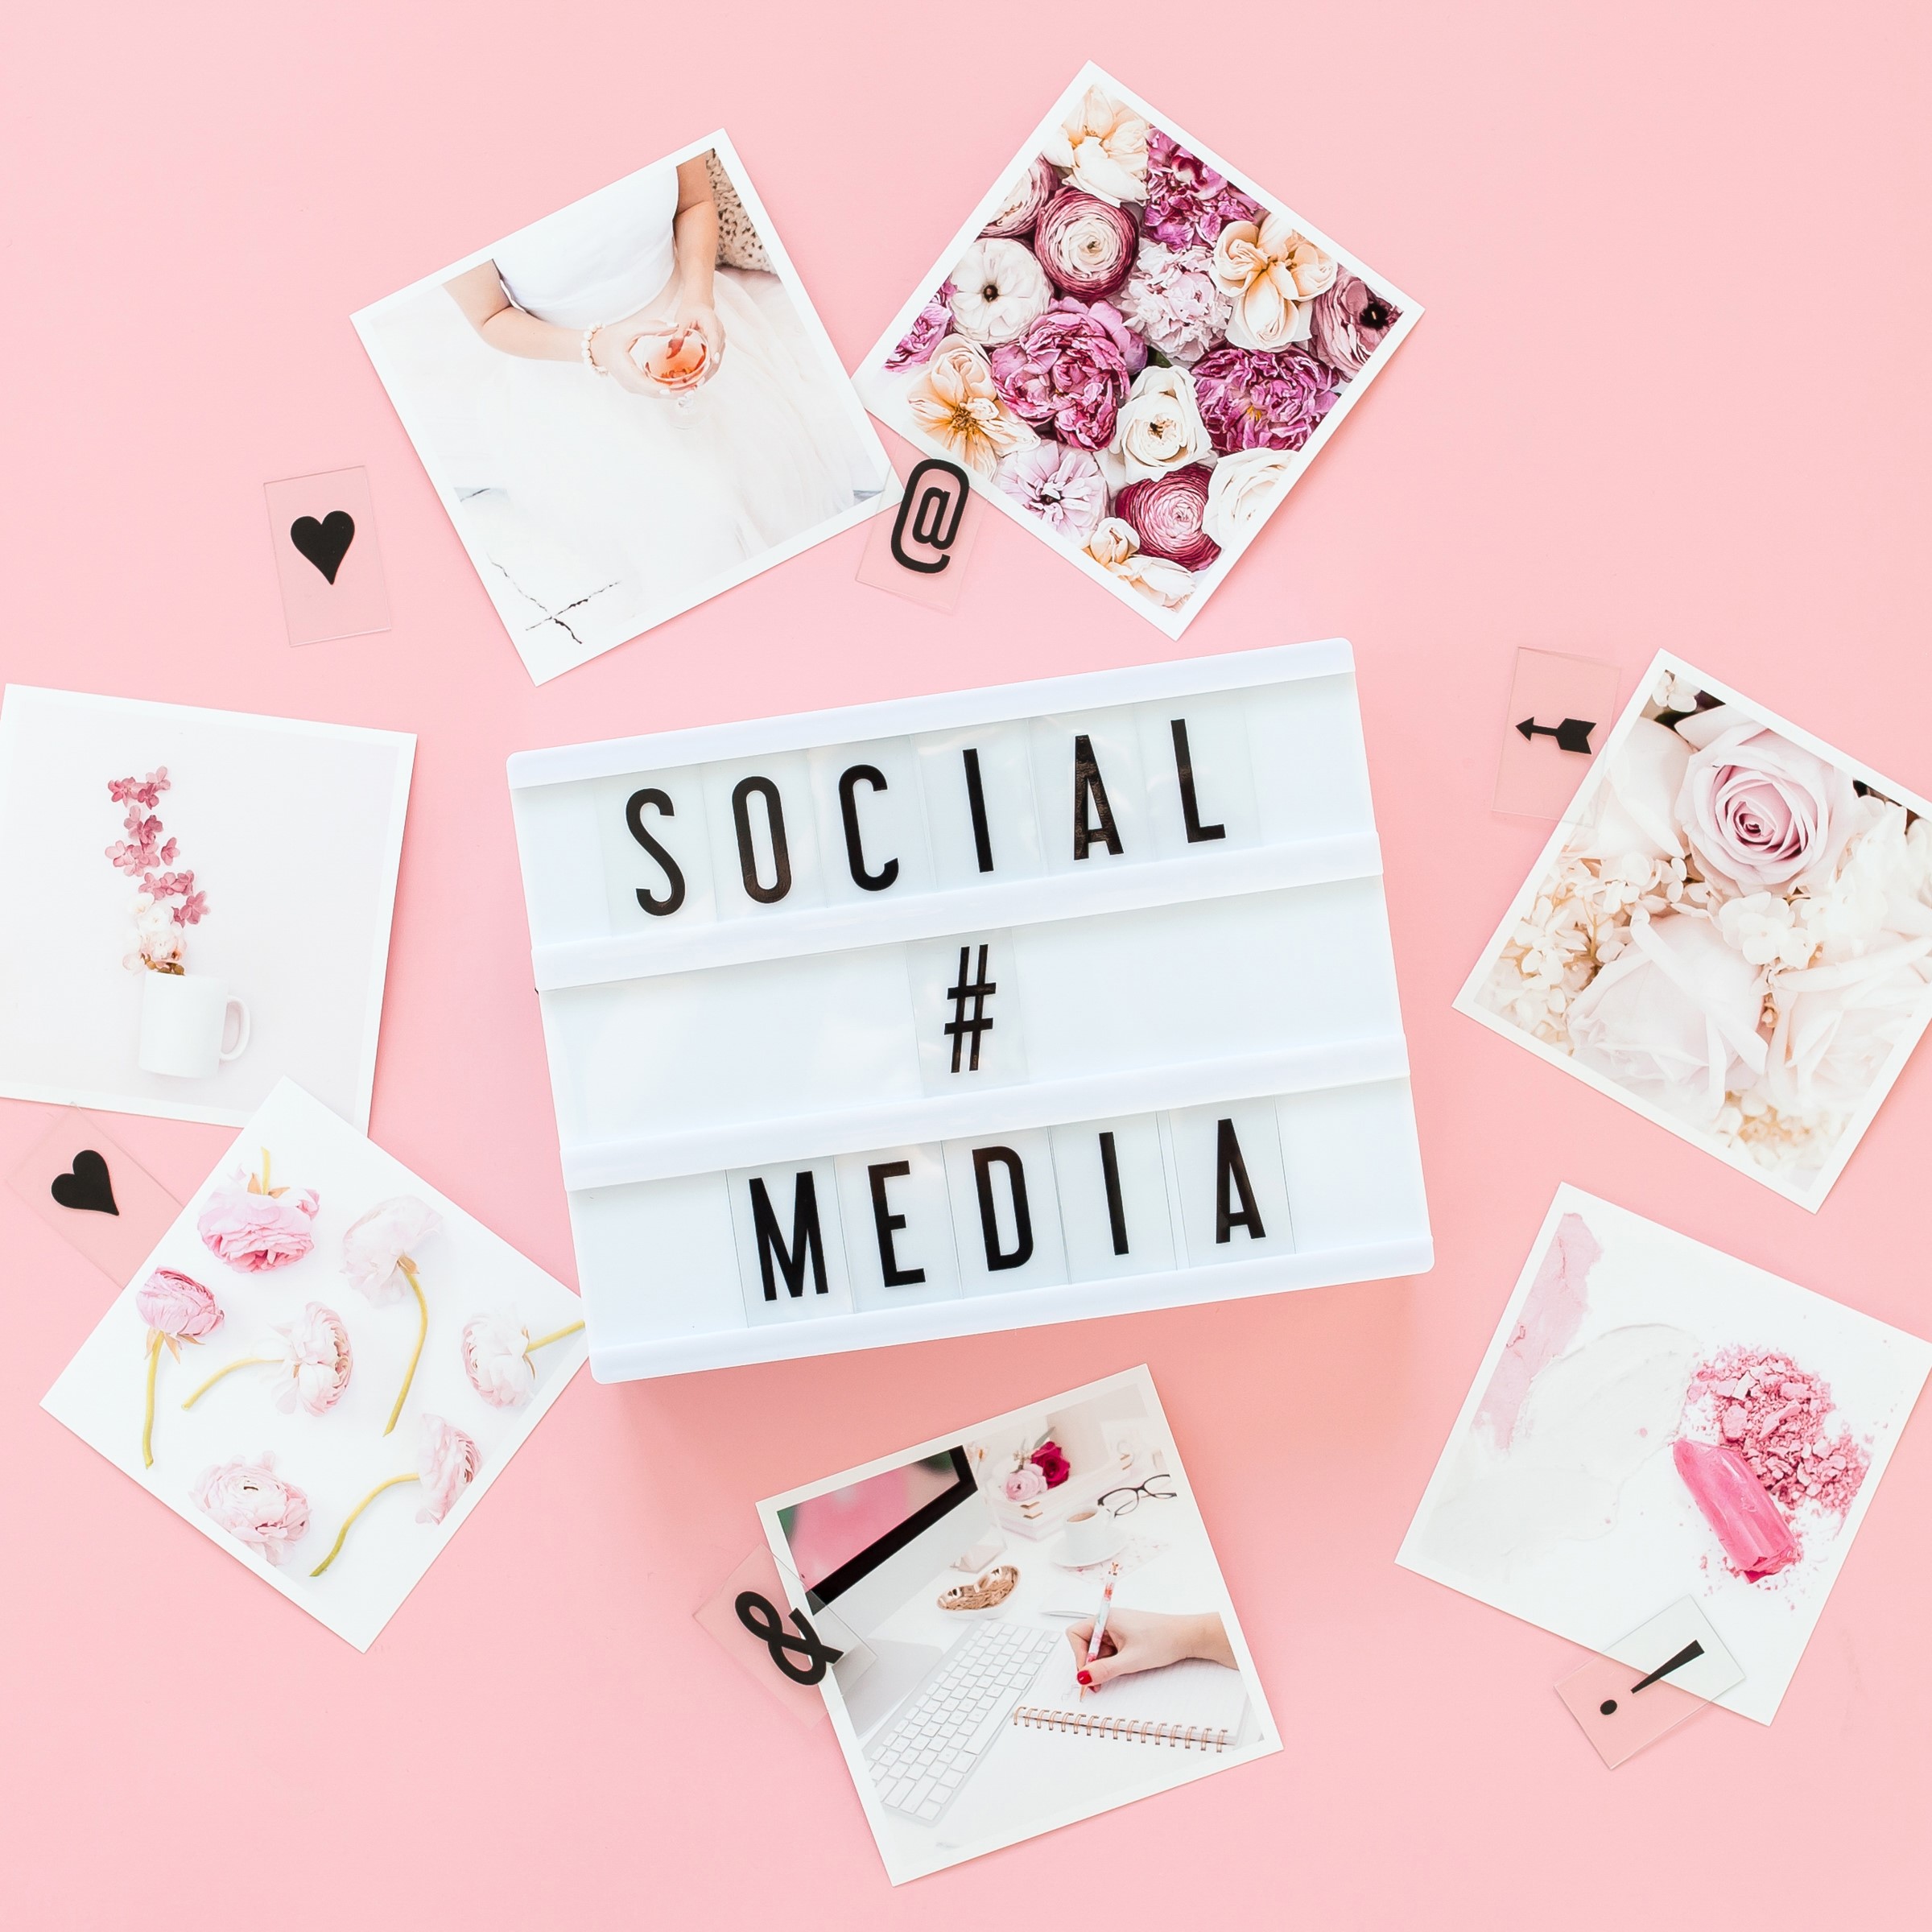 Peoples Favorite Social Media Site? - We Love Florists Survey